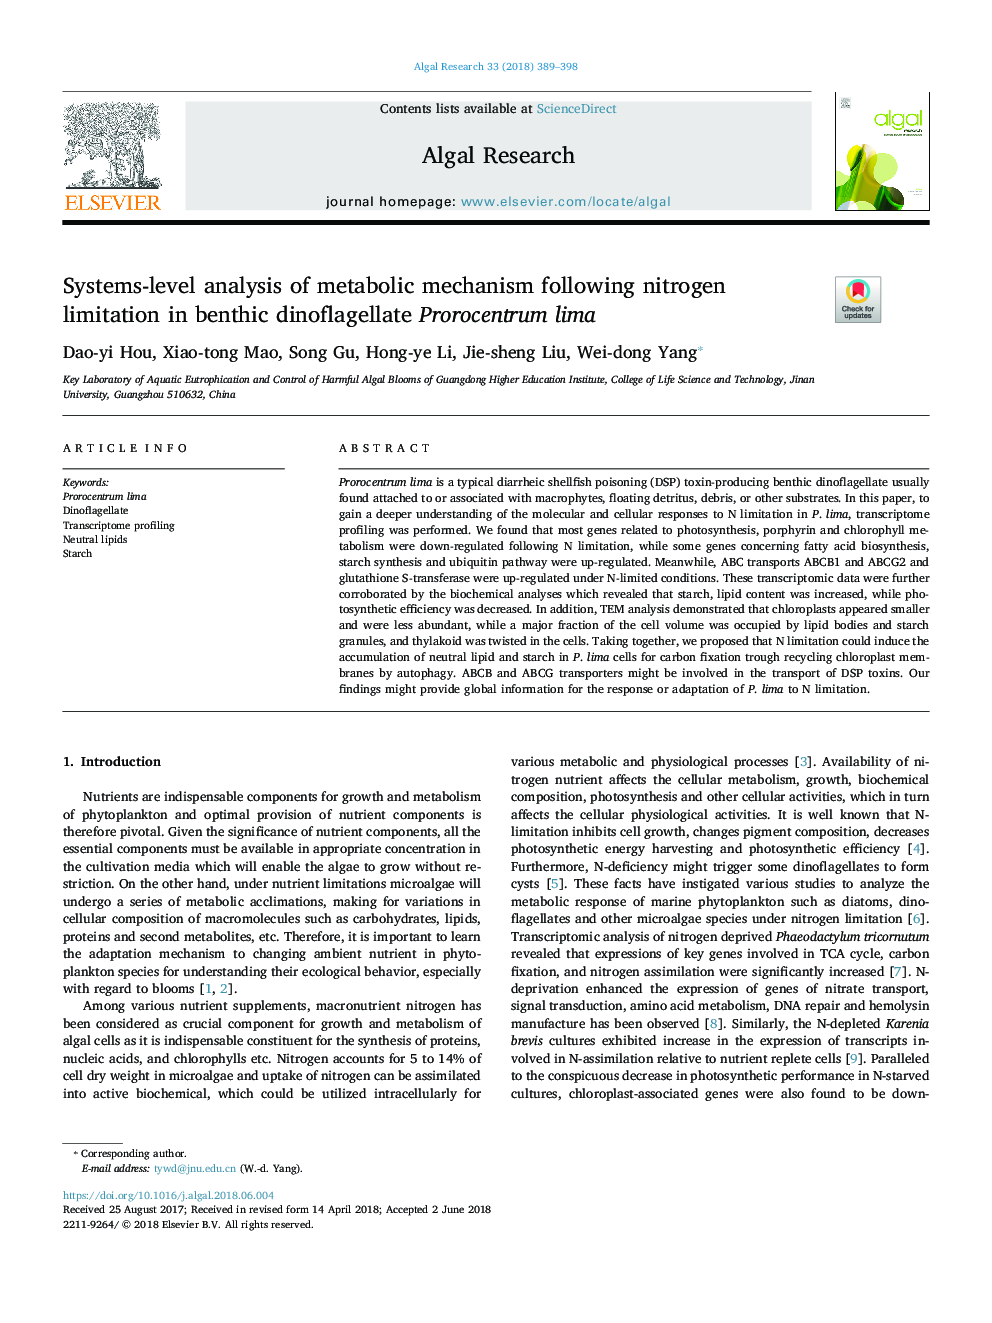 Systems-level analysis of metabolic mechanism following nitrogen limitation in benthic dinoflagellate Prorocentrum lima